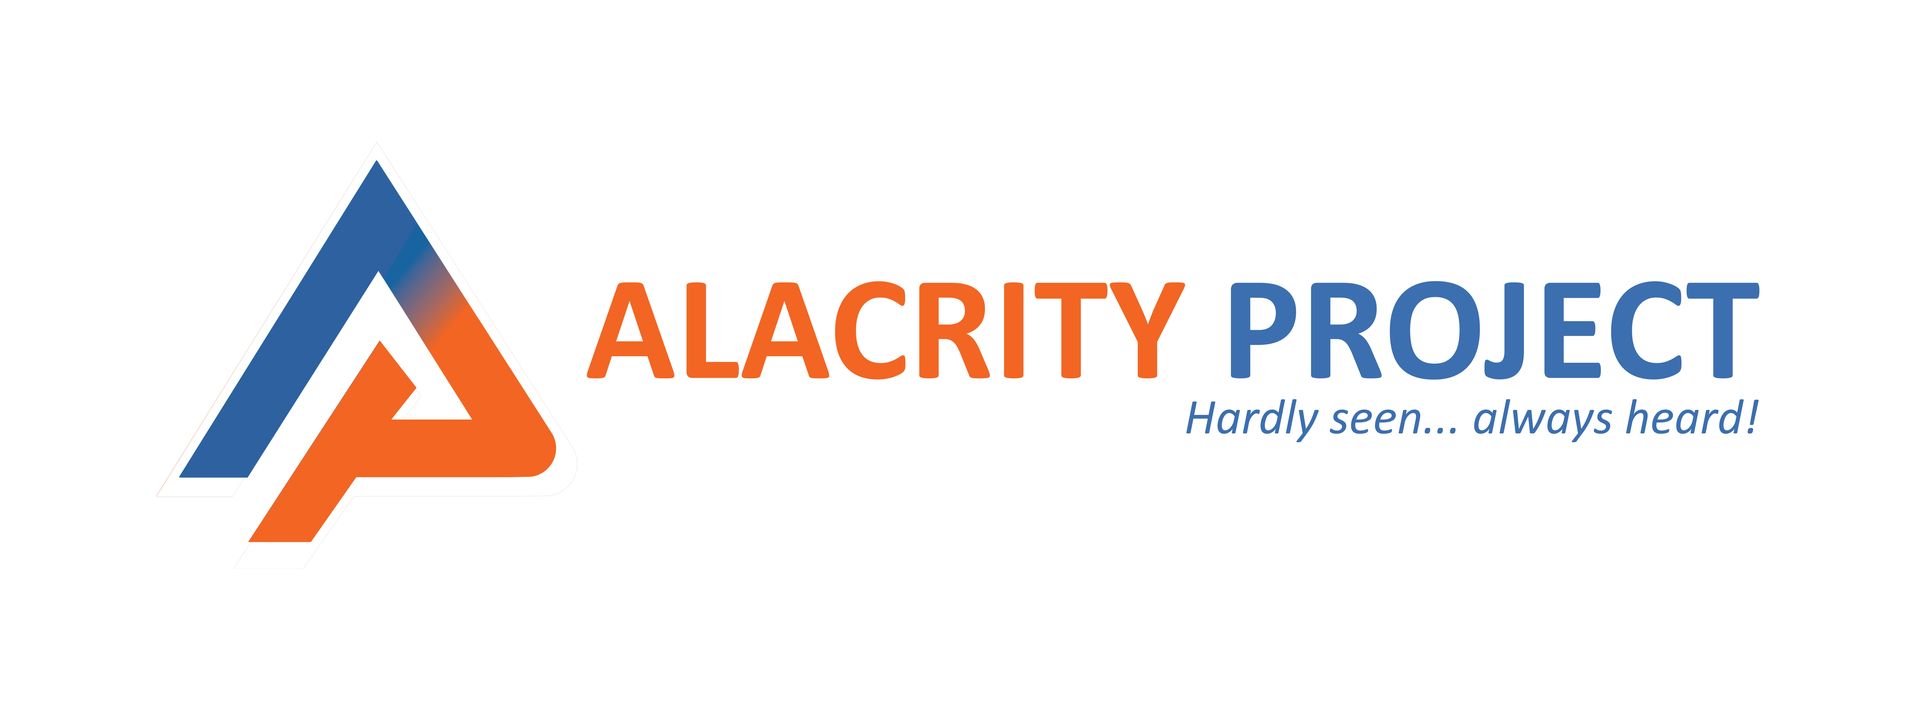 Alacrity Project 5